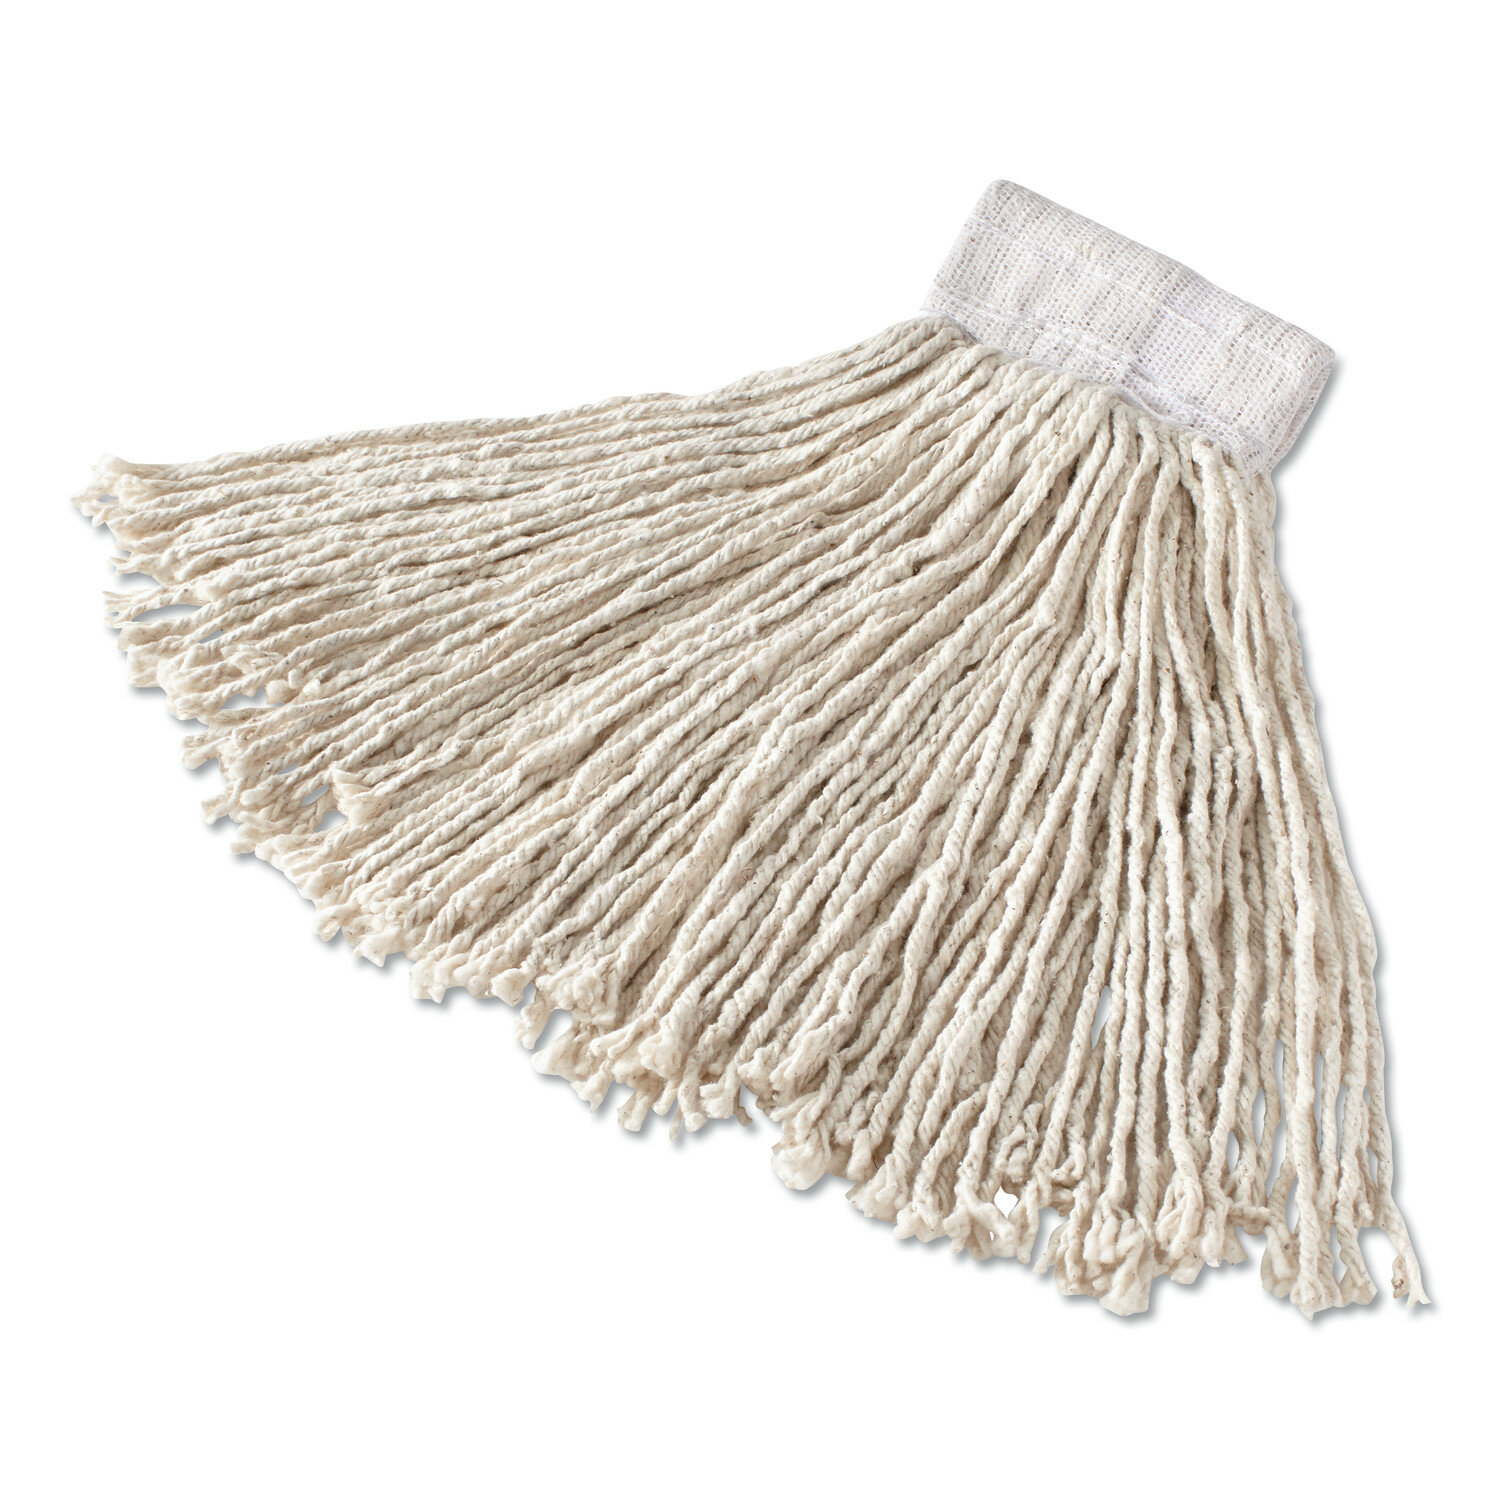 FGD11306WH00 White Rubbermaid Commercial Super Stitch Cotton Mop Large 